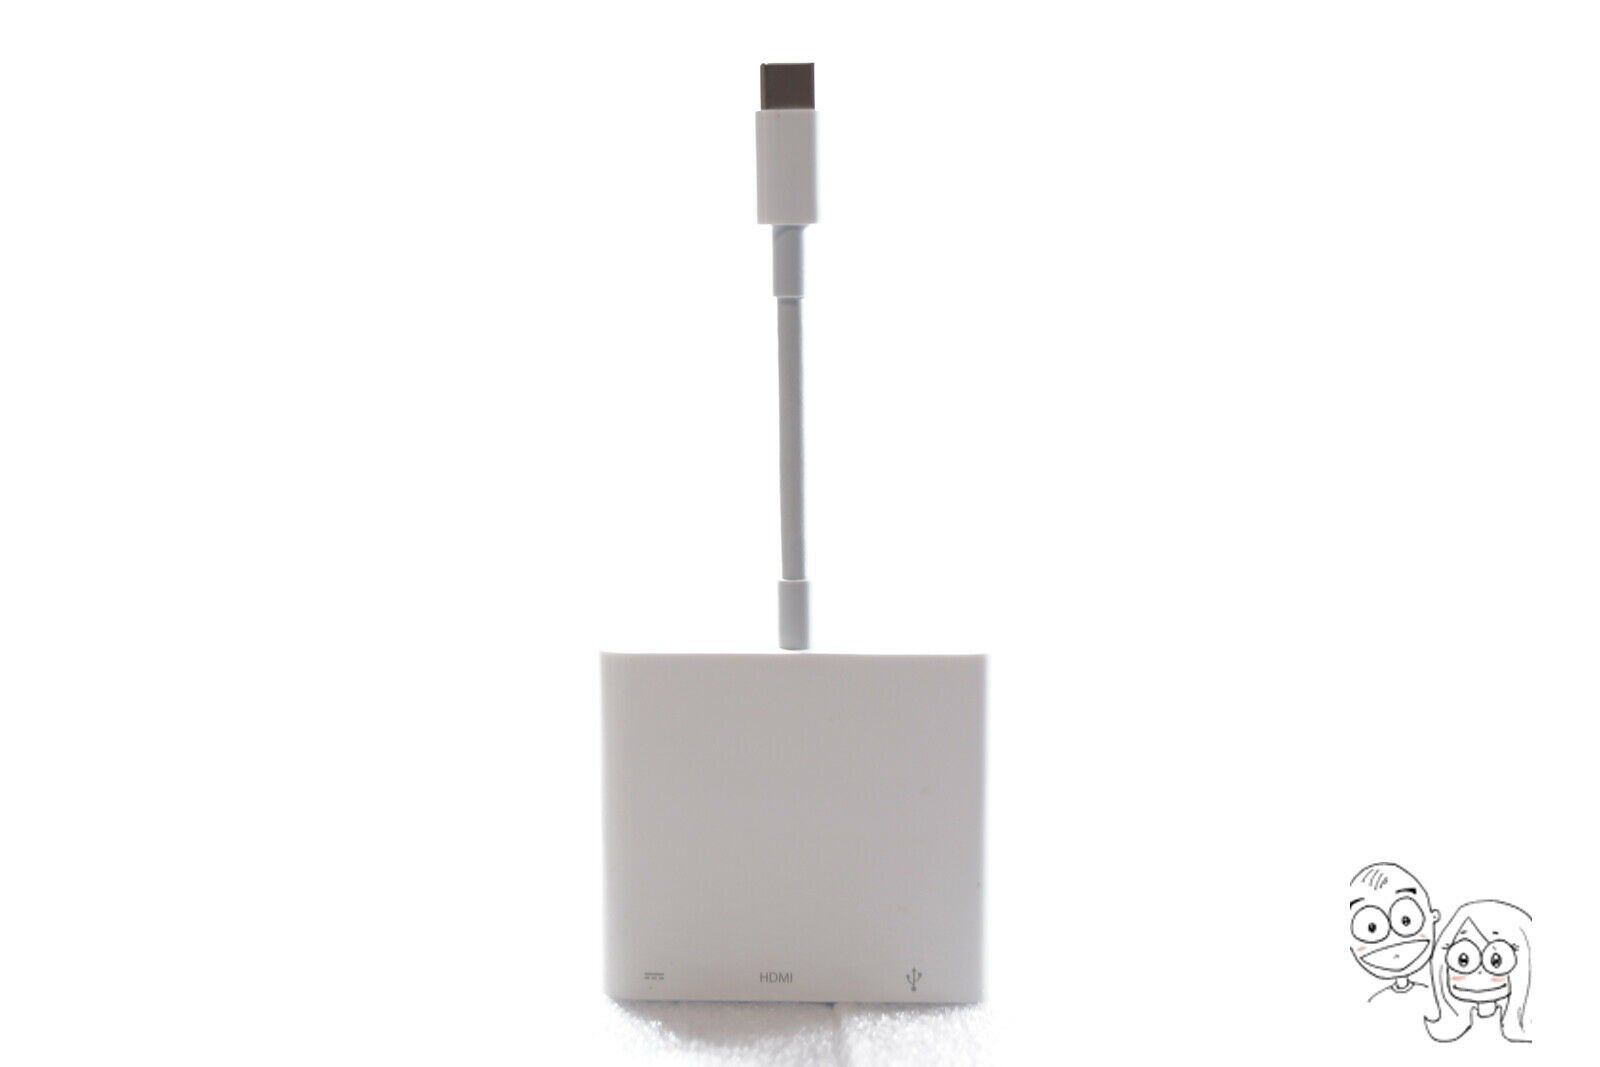 Authentic Apple USB-C Digital AV Multiport Adapter TV Macbook iPhone MJ1K2AM/A